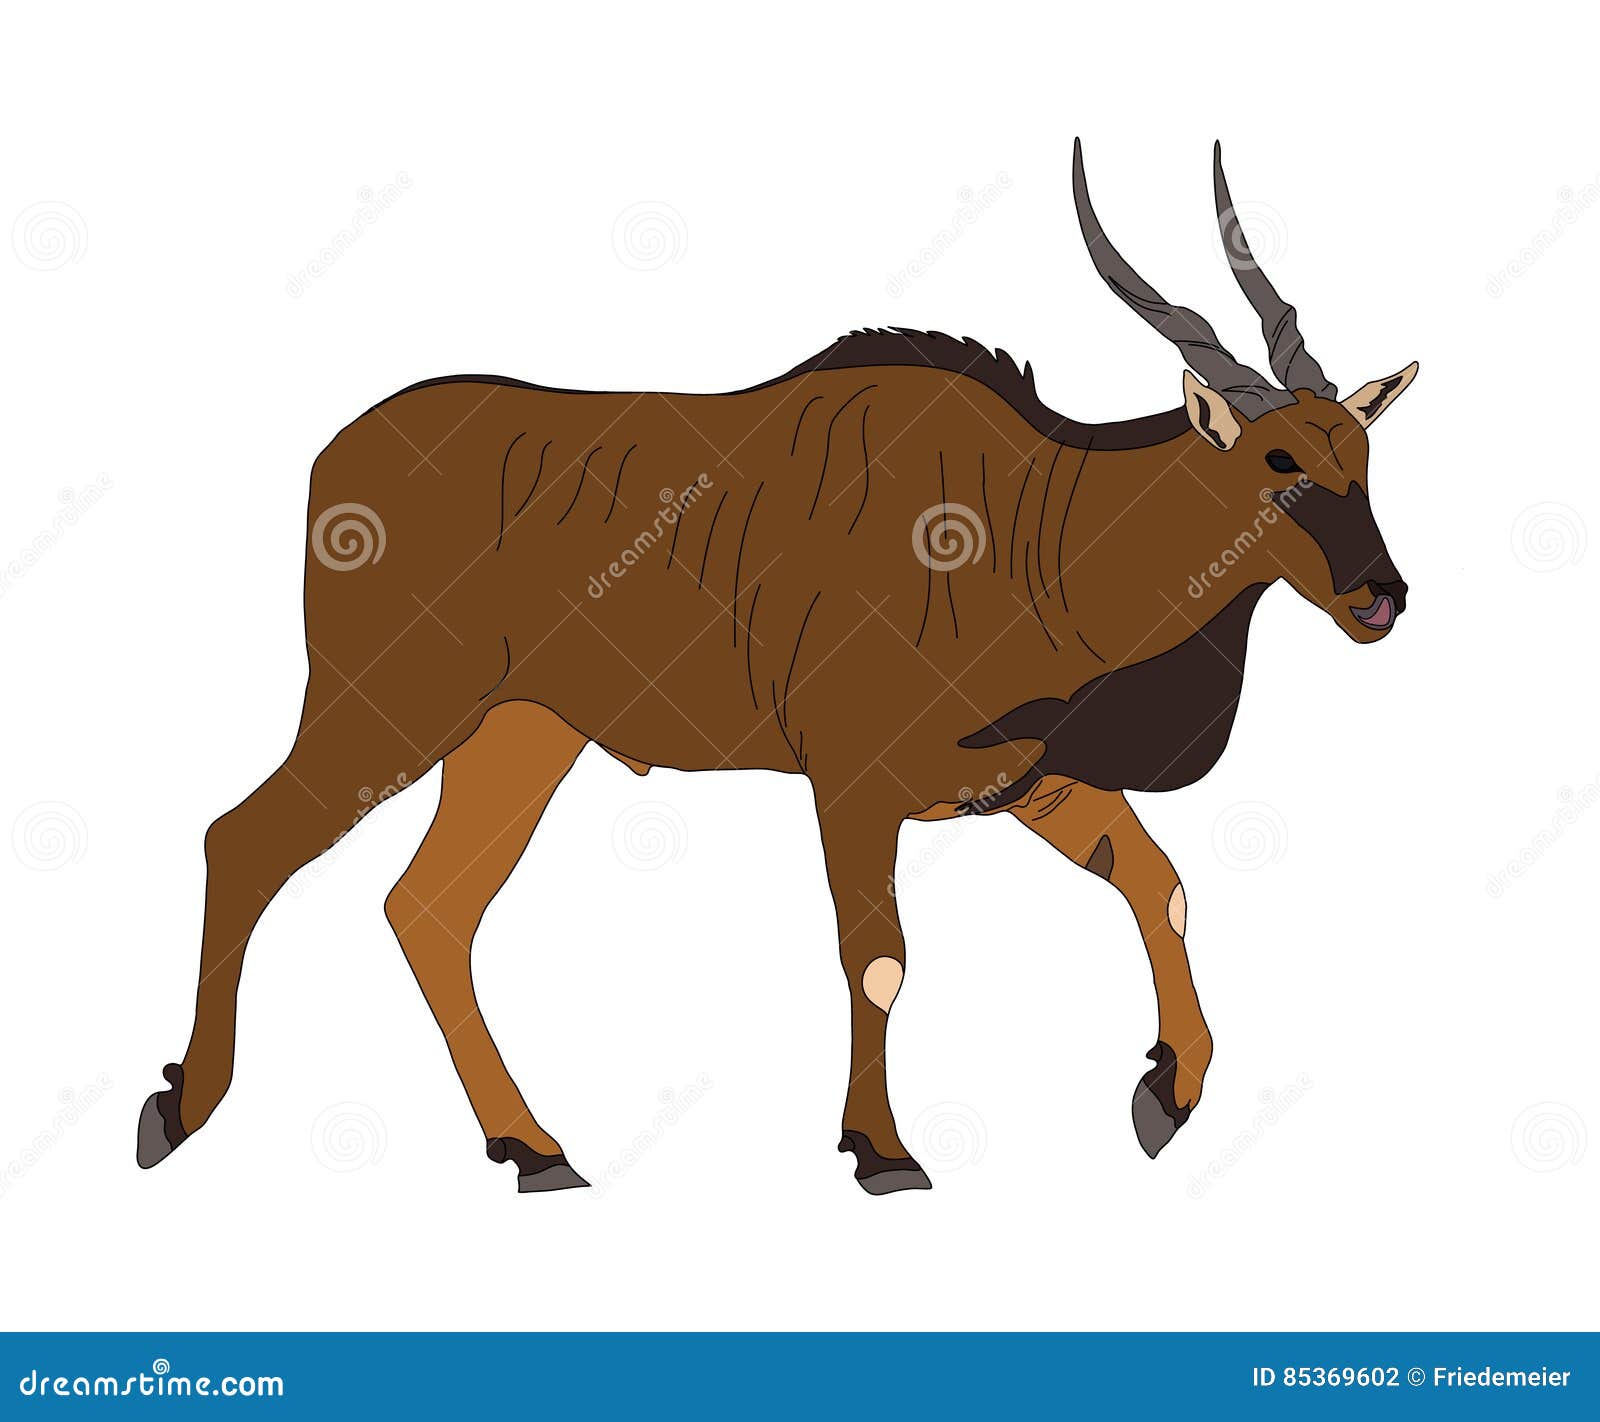 common eland - antelope - seen from side, walking, head forward